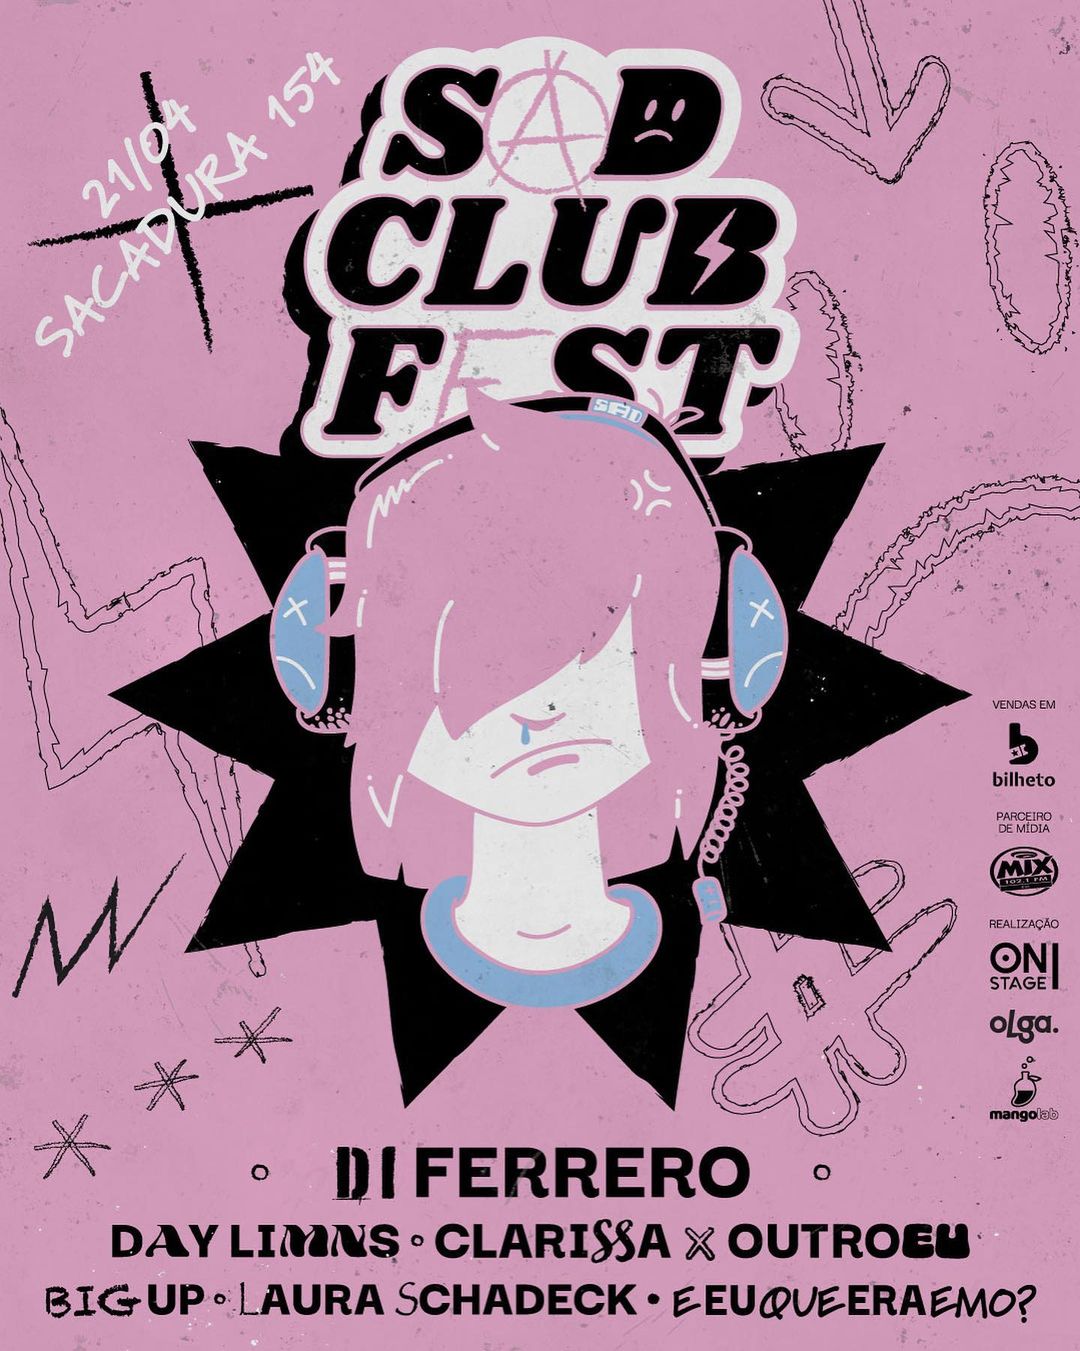 Sad Club Fest 2022 - 21/04/2022